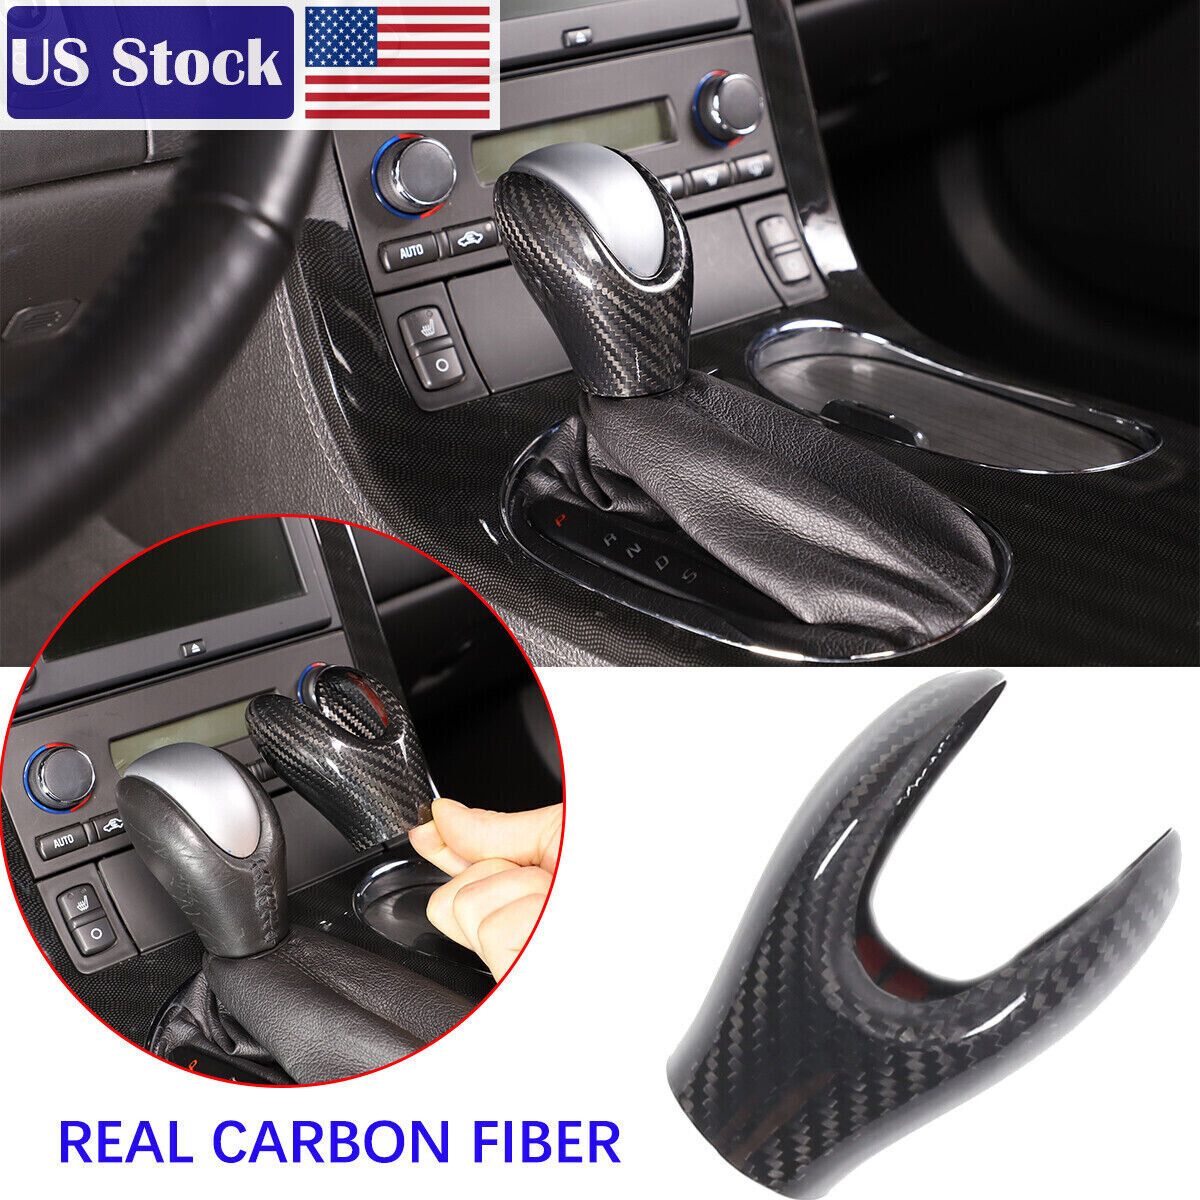 Real Carbon Fiber Console Gear Knob Head Cover Trim For Corvette C6 05-13 US